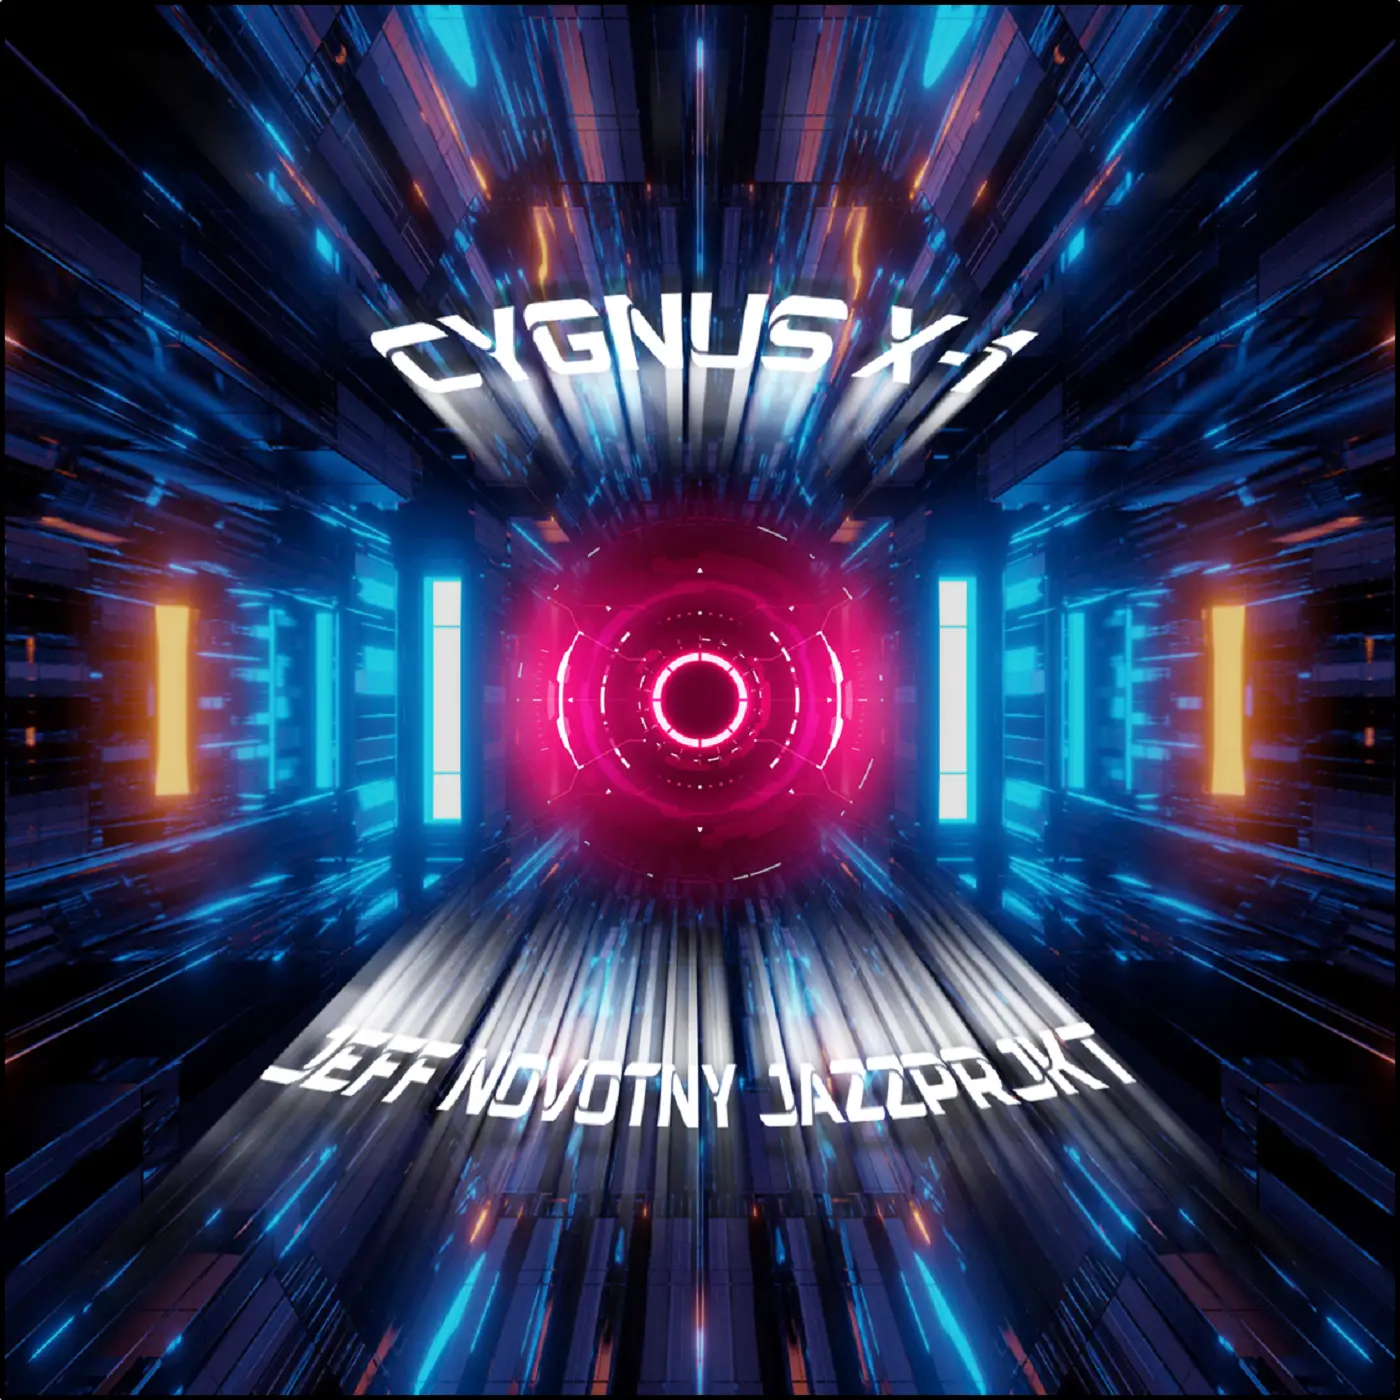 Jeff Novotny JAZZPRJKT - "Cygnus X-1" Reaction | Opinions | LIVING LIFE FEARLESS